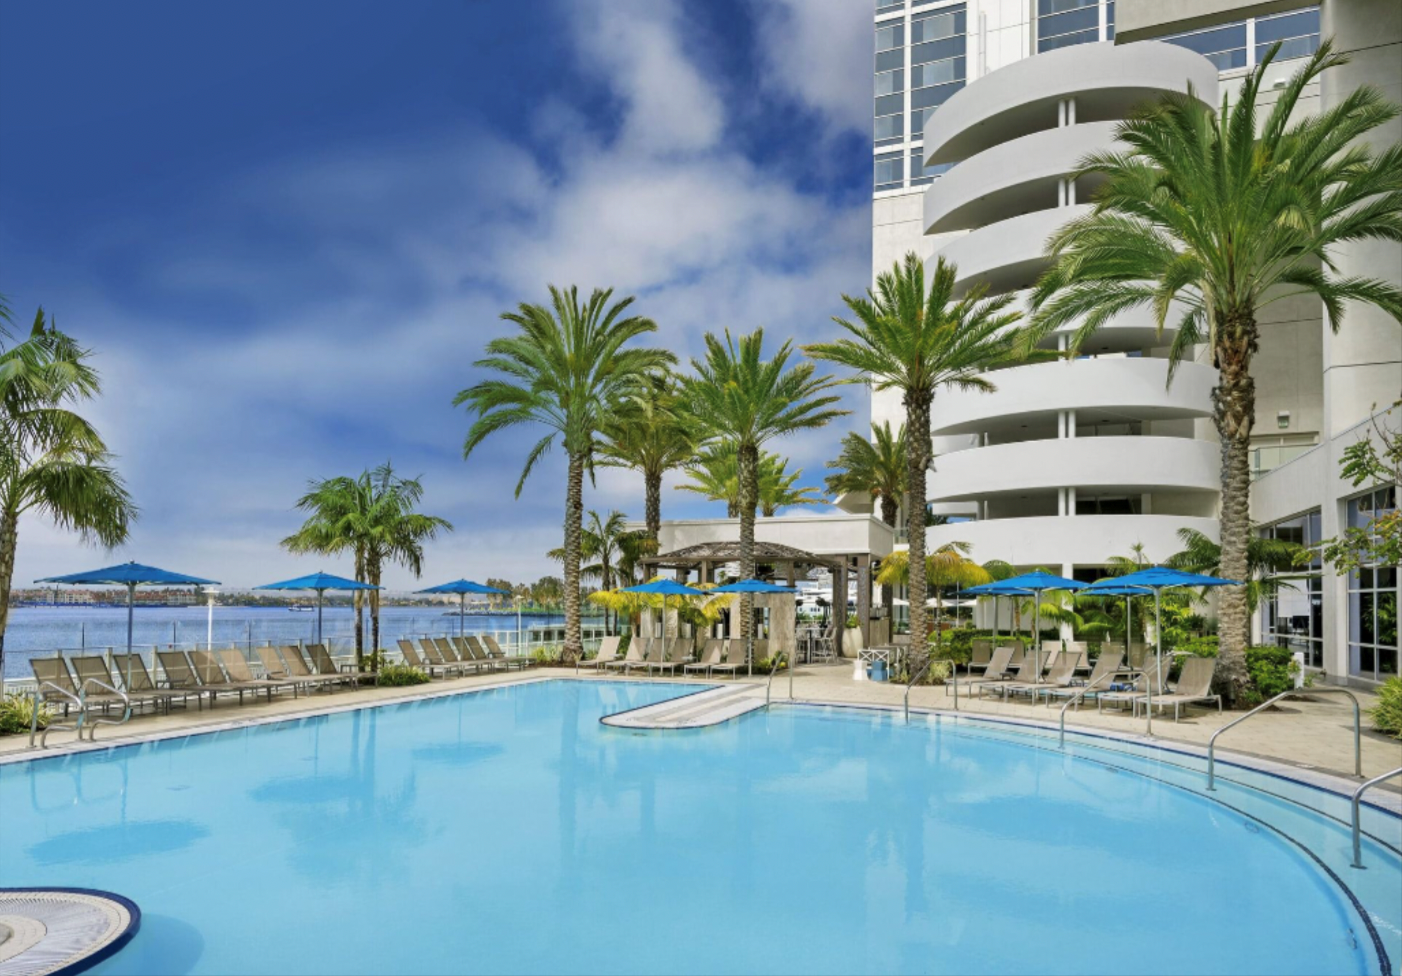 Swimming Pool in Beach View -  San Diego, CA - CM Precision Tree & Landscape Maintenance Inc.